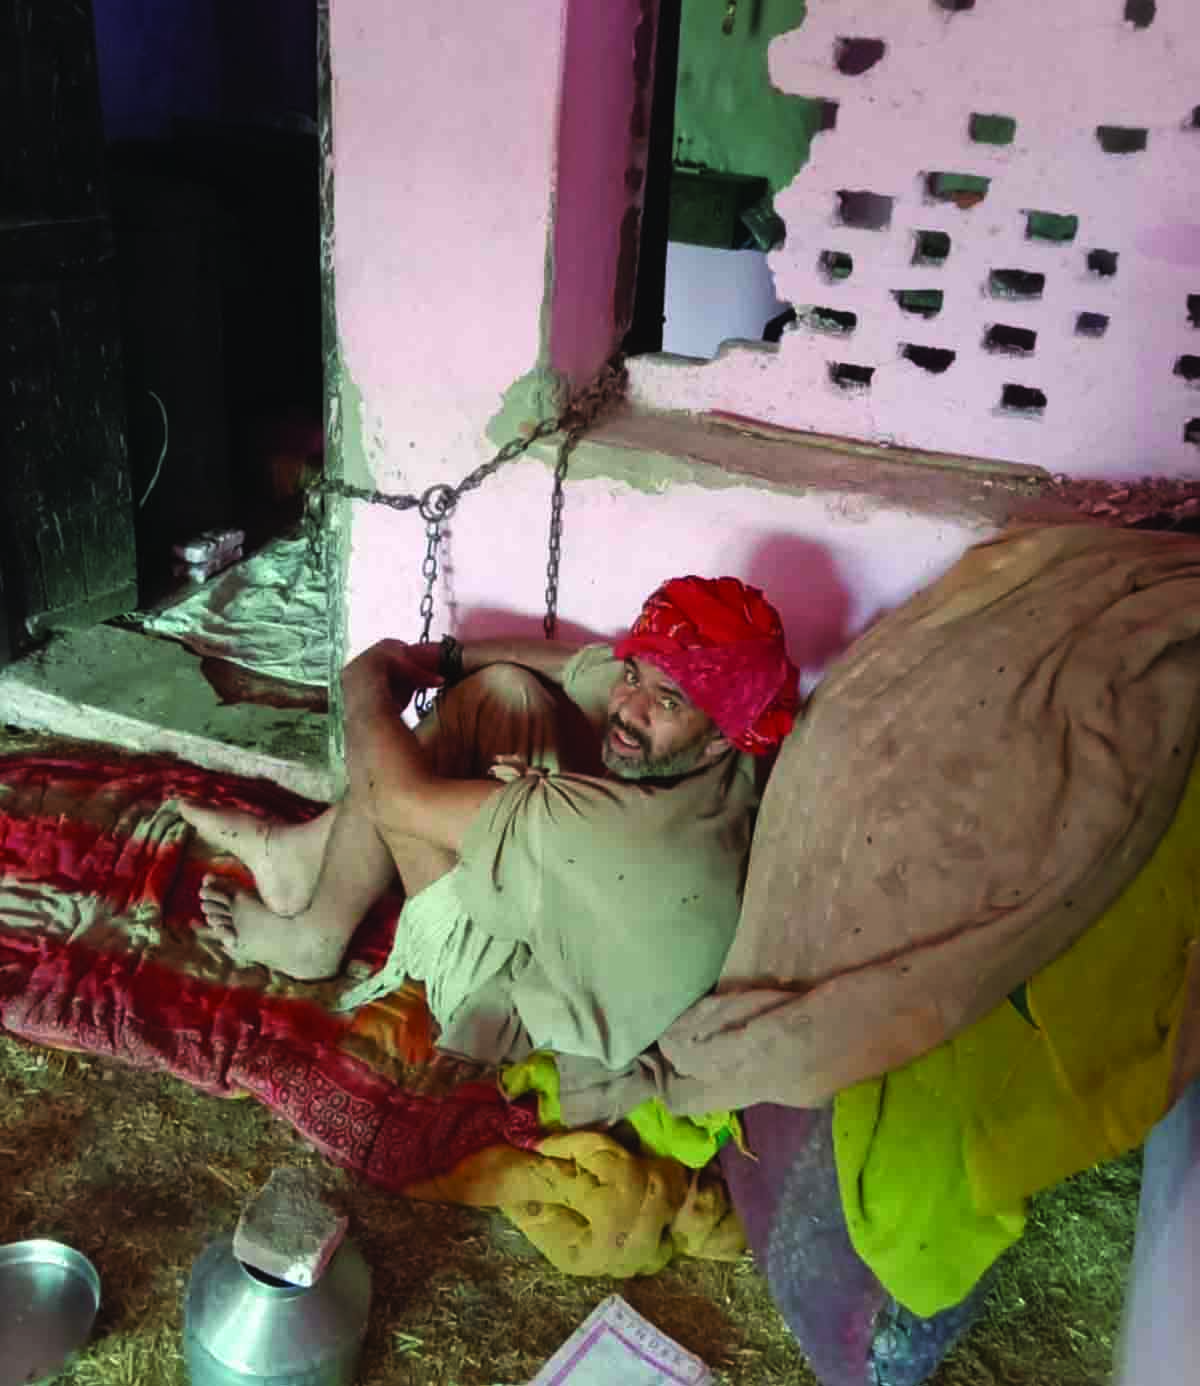 'Prabhu' has been held in beds since 14 years